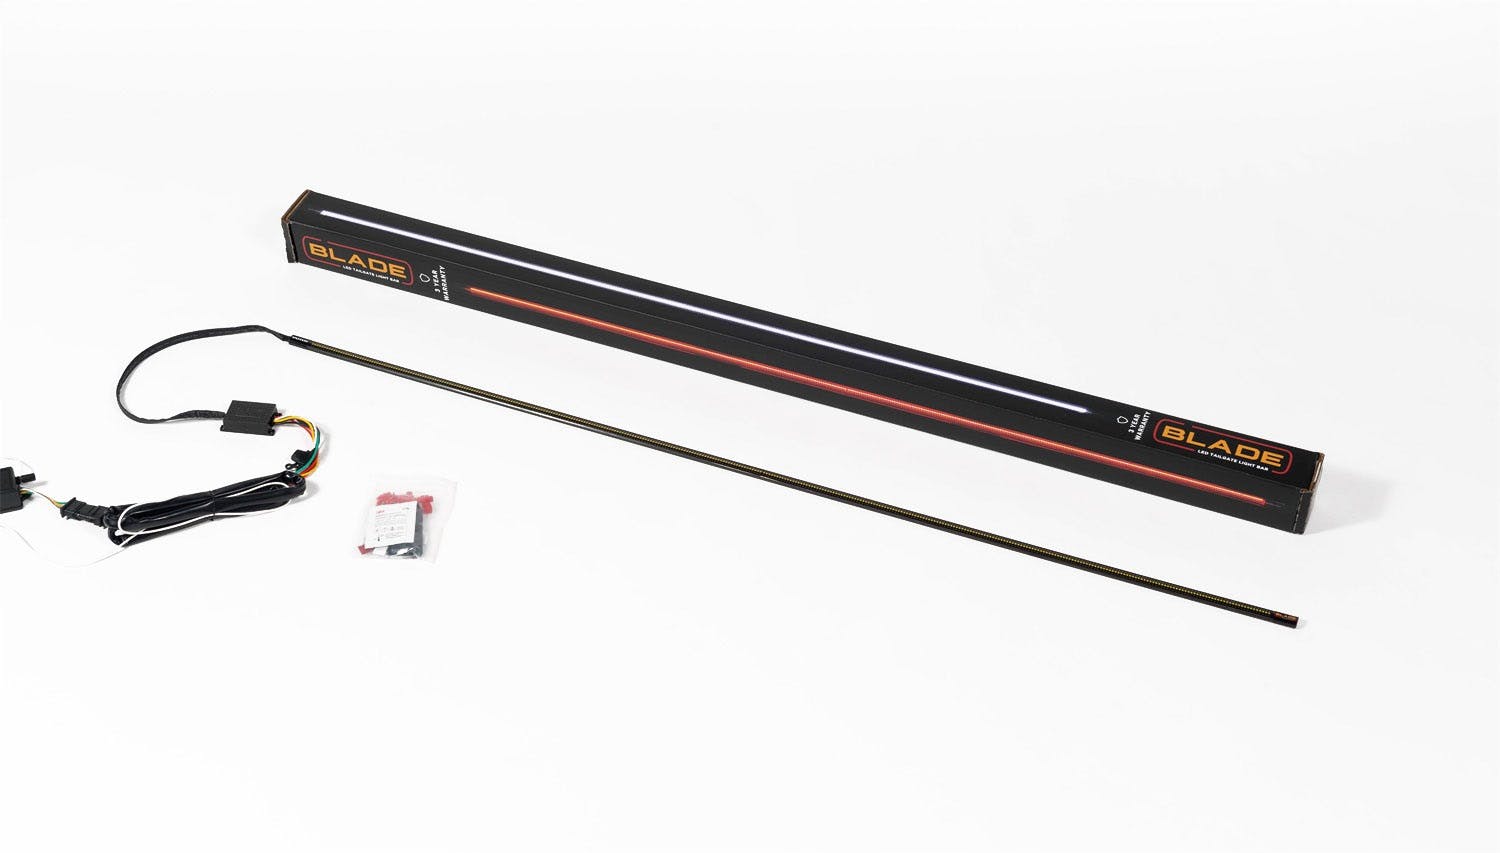 Putco 9201960-06 60 inch Direct Fit Blade Kit